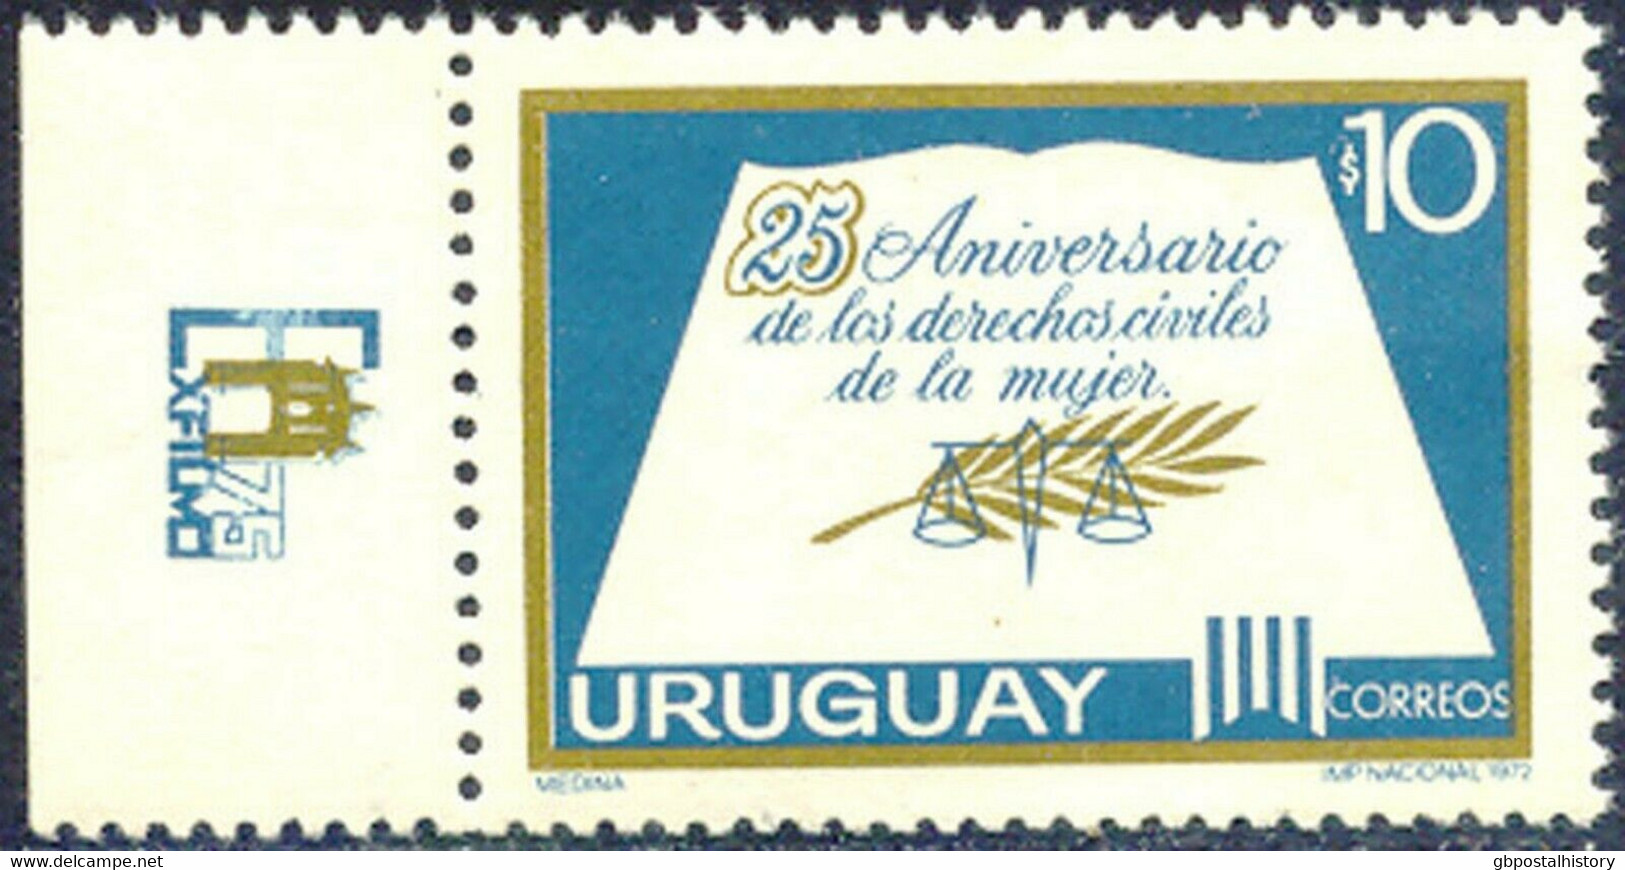 URUGUAY 1972 25 Years Women Civil Law 10 P. U/M MAJOR VARIETY MISSING COLOR BLUE - Uruguay